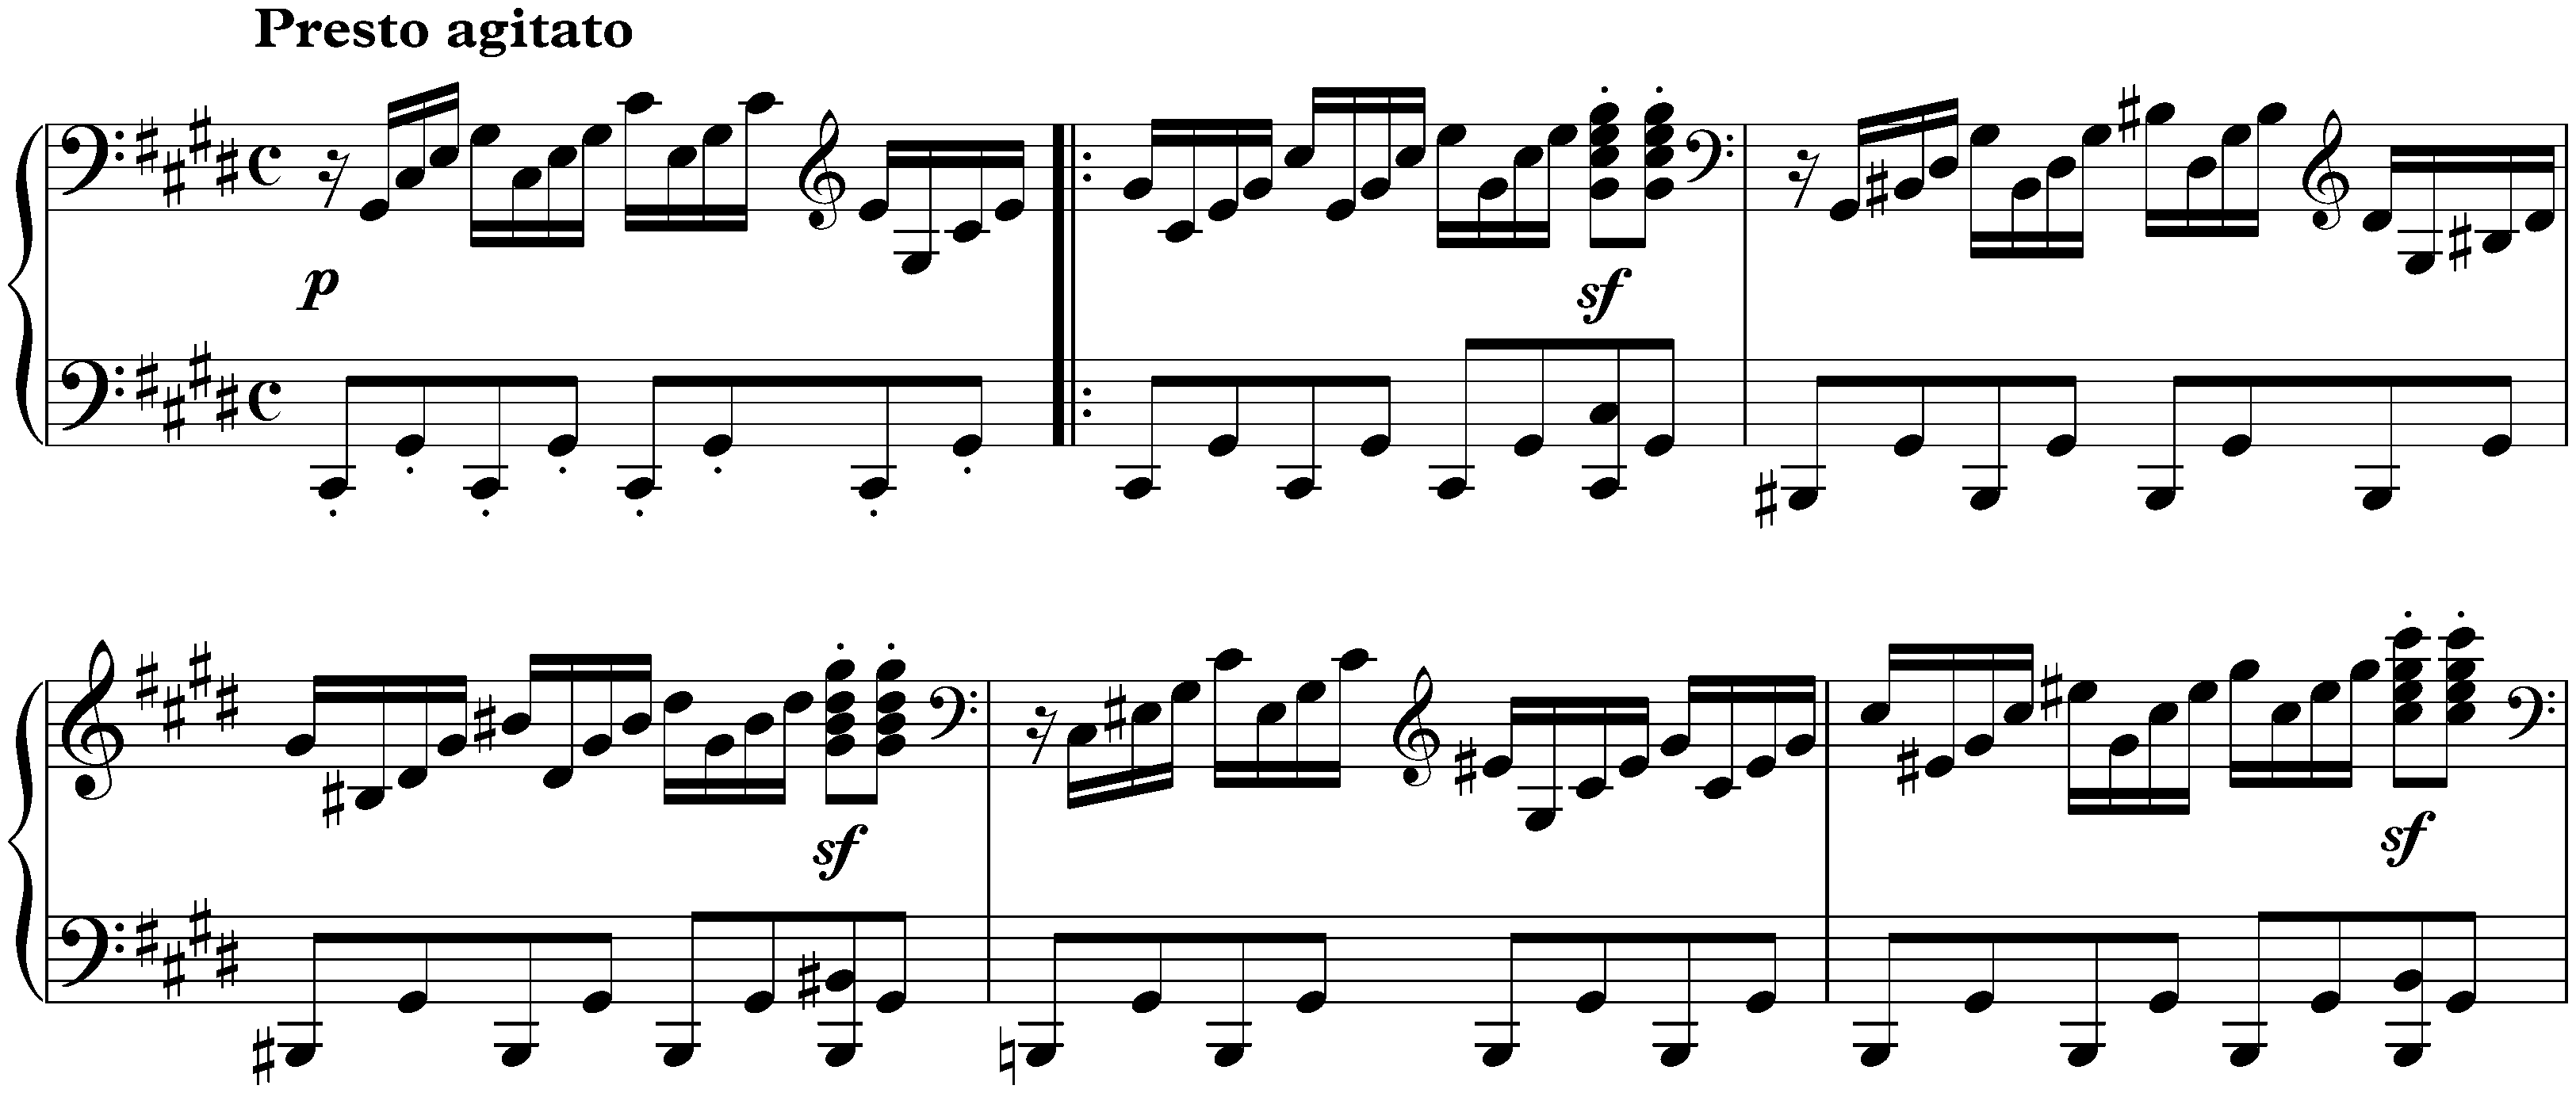 Sonata no. 14 in C-sharp minor, op. 27 no. 2 (Moonlight); 3. Presto agitato